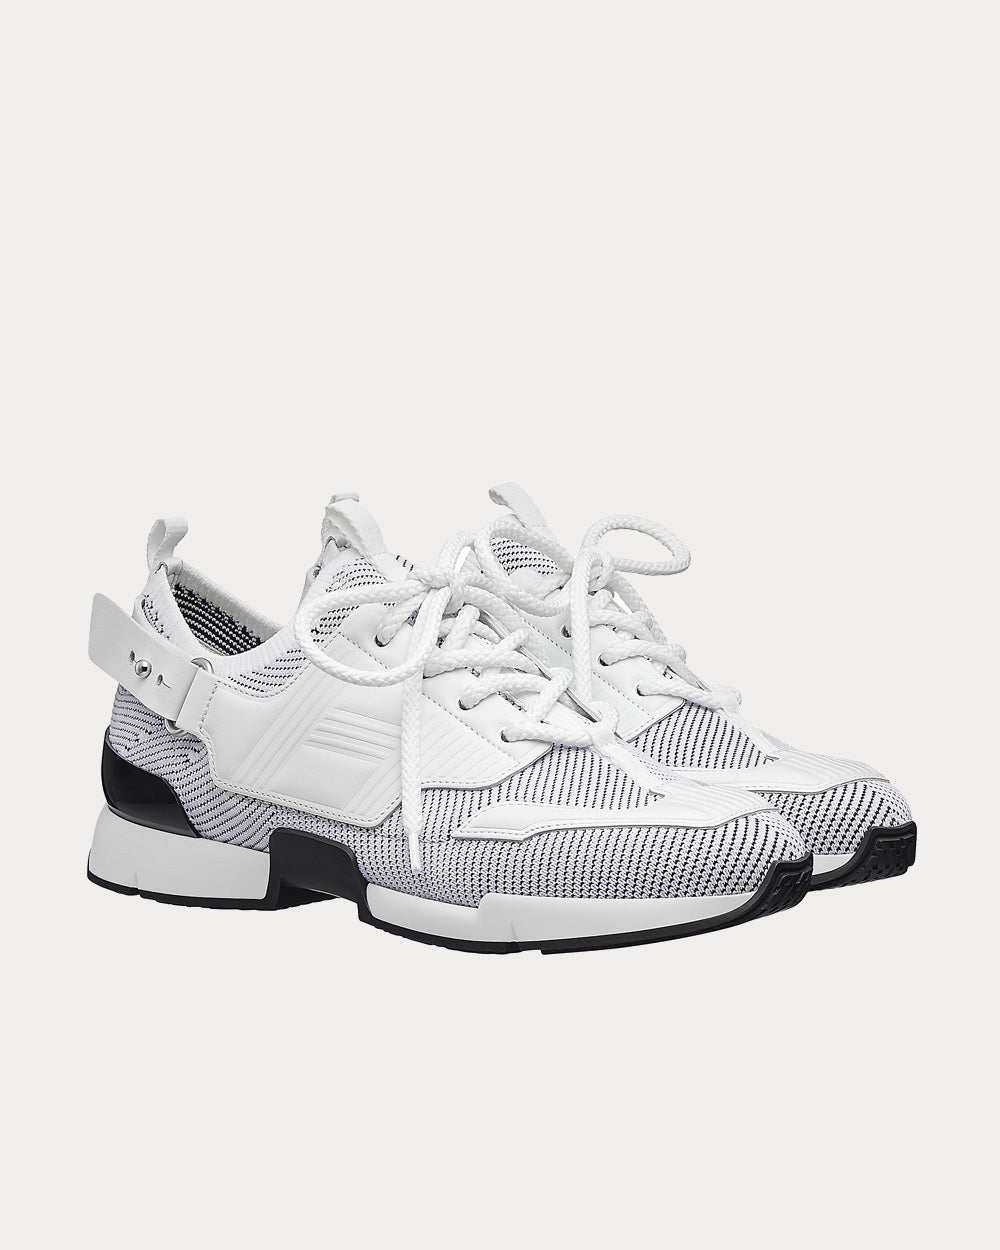 Hermès - Athlete Multicolore Blanc Low Top Sneakers